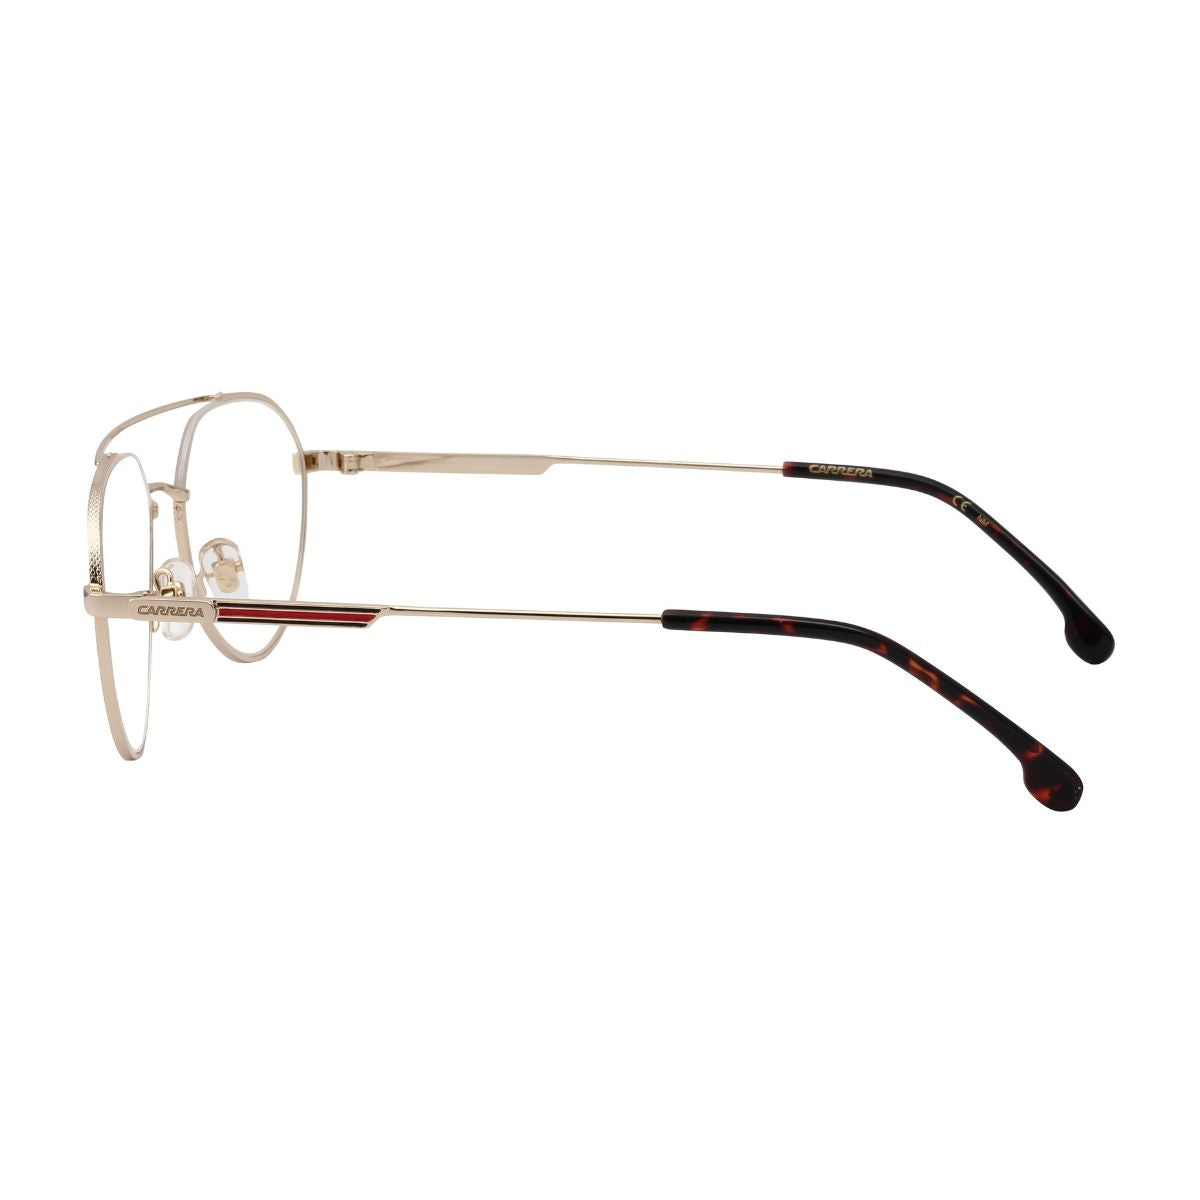 "best Carrera 1110 J5G prescription eyeglasses frame for men and women at optorium"